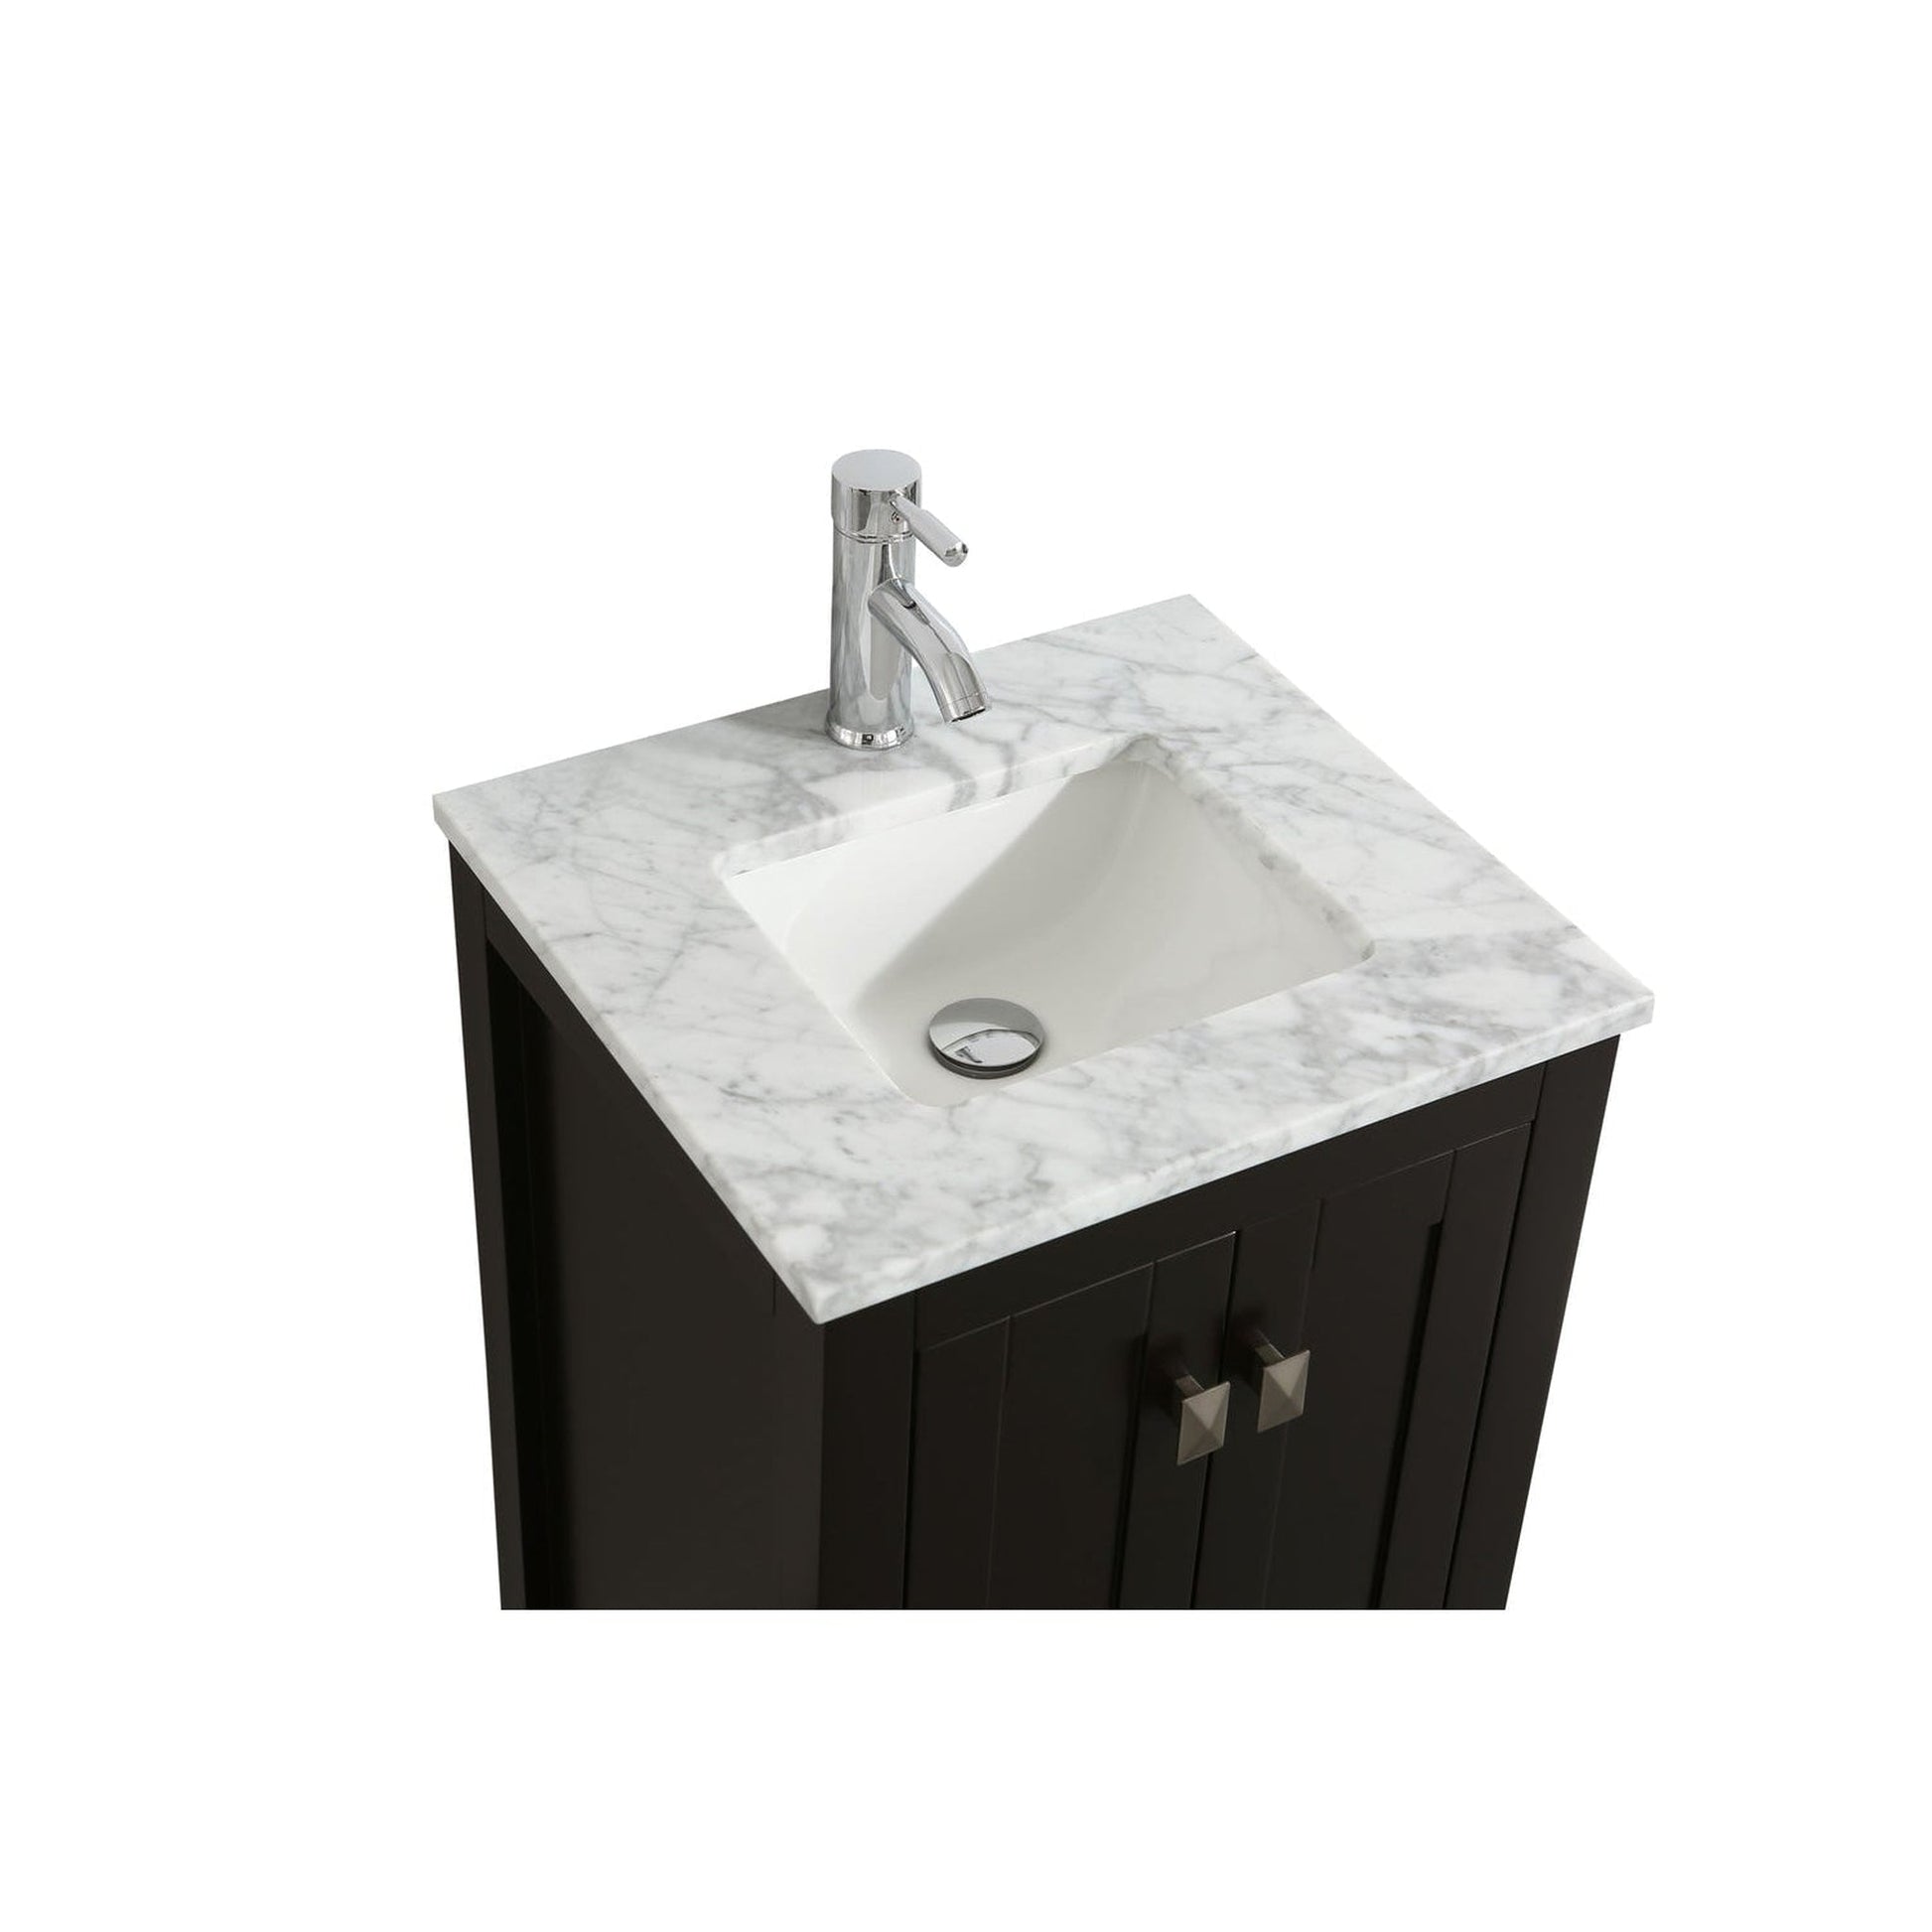 Eviva London 20" x 34" Espresso Freestanding Bathroom Vanity With Carrara Marble Countertop and Single Undermount Sink